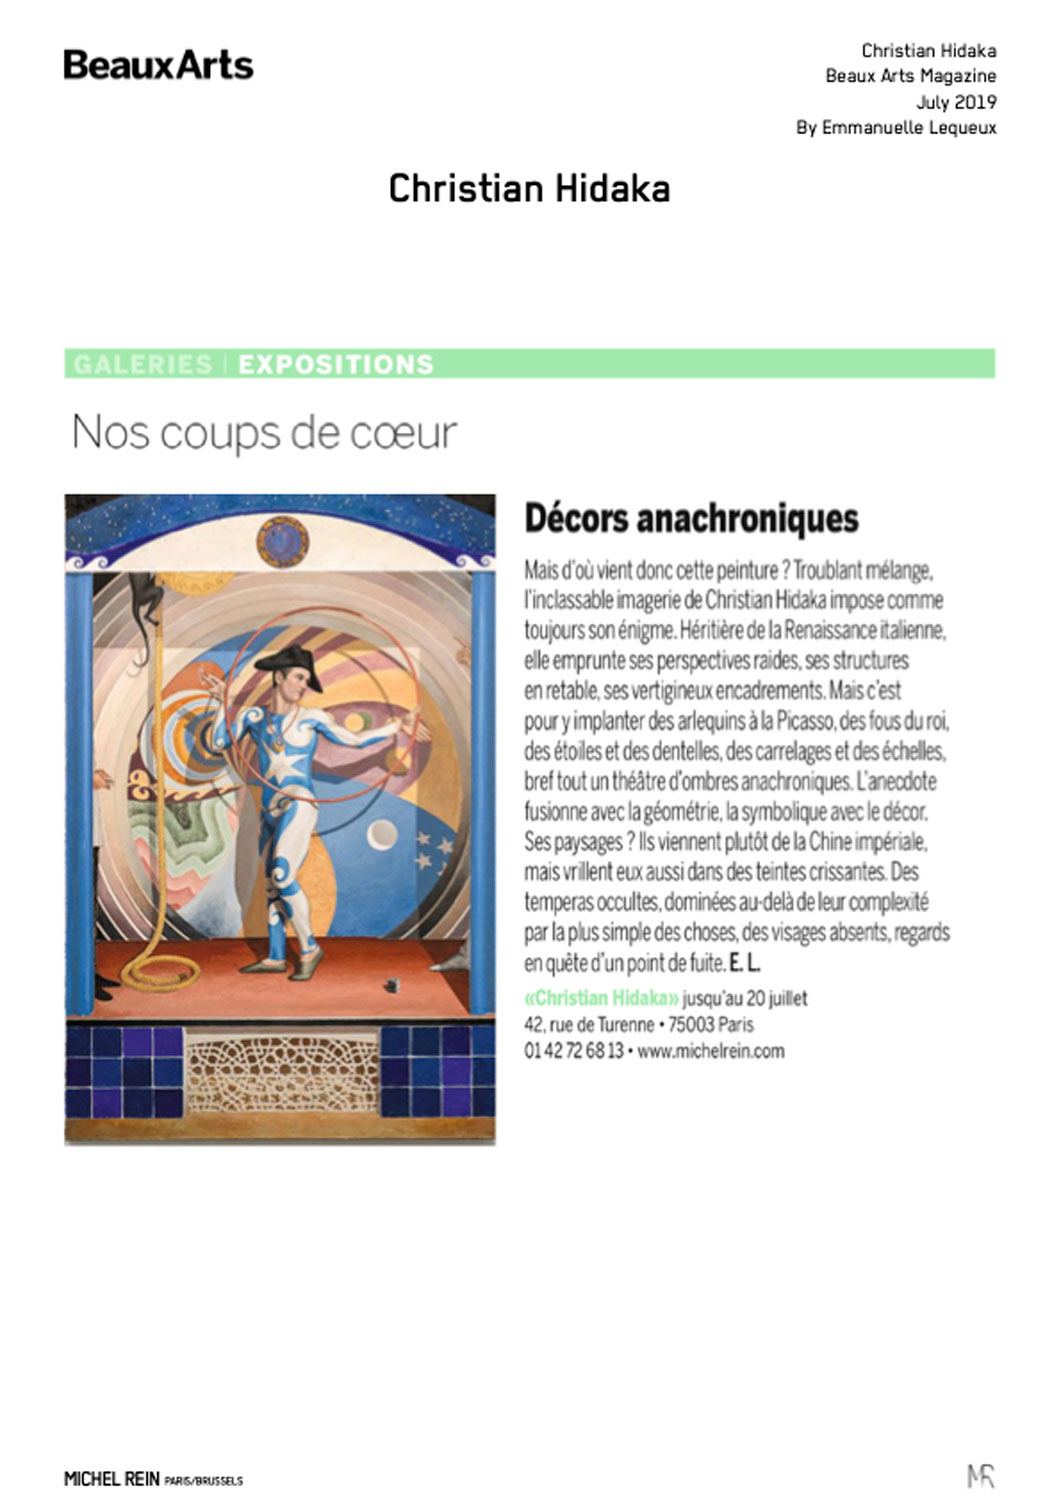 Dcors anachroniques - Beaux Arts Magazine